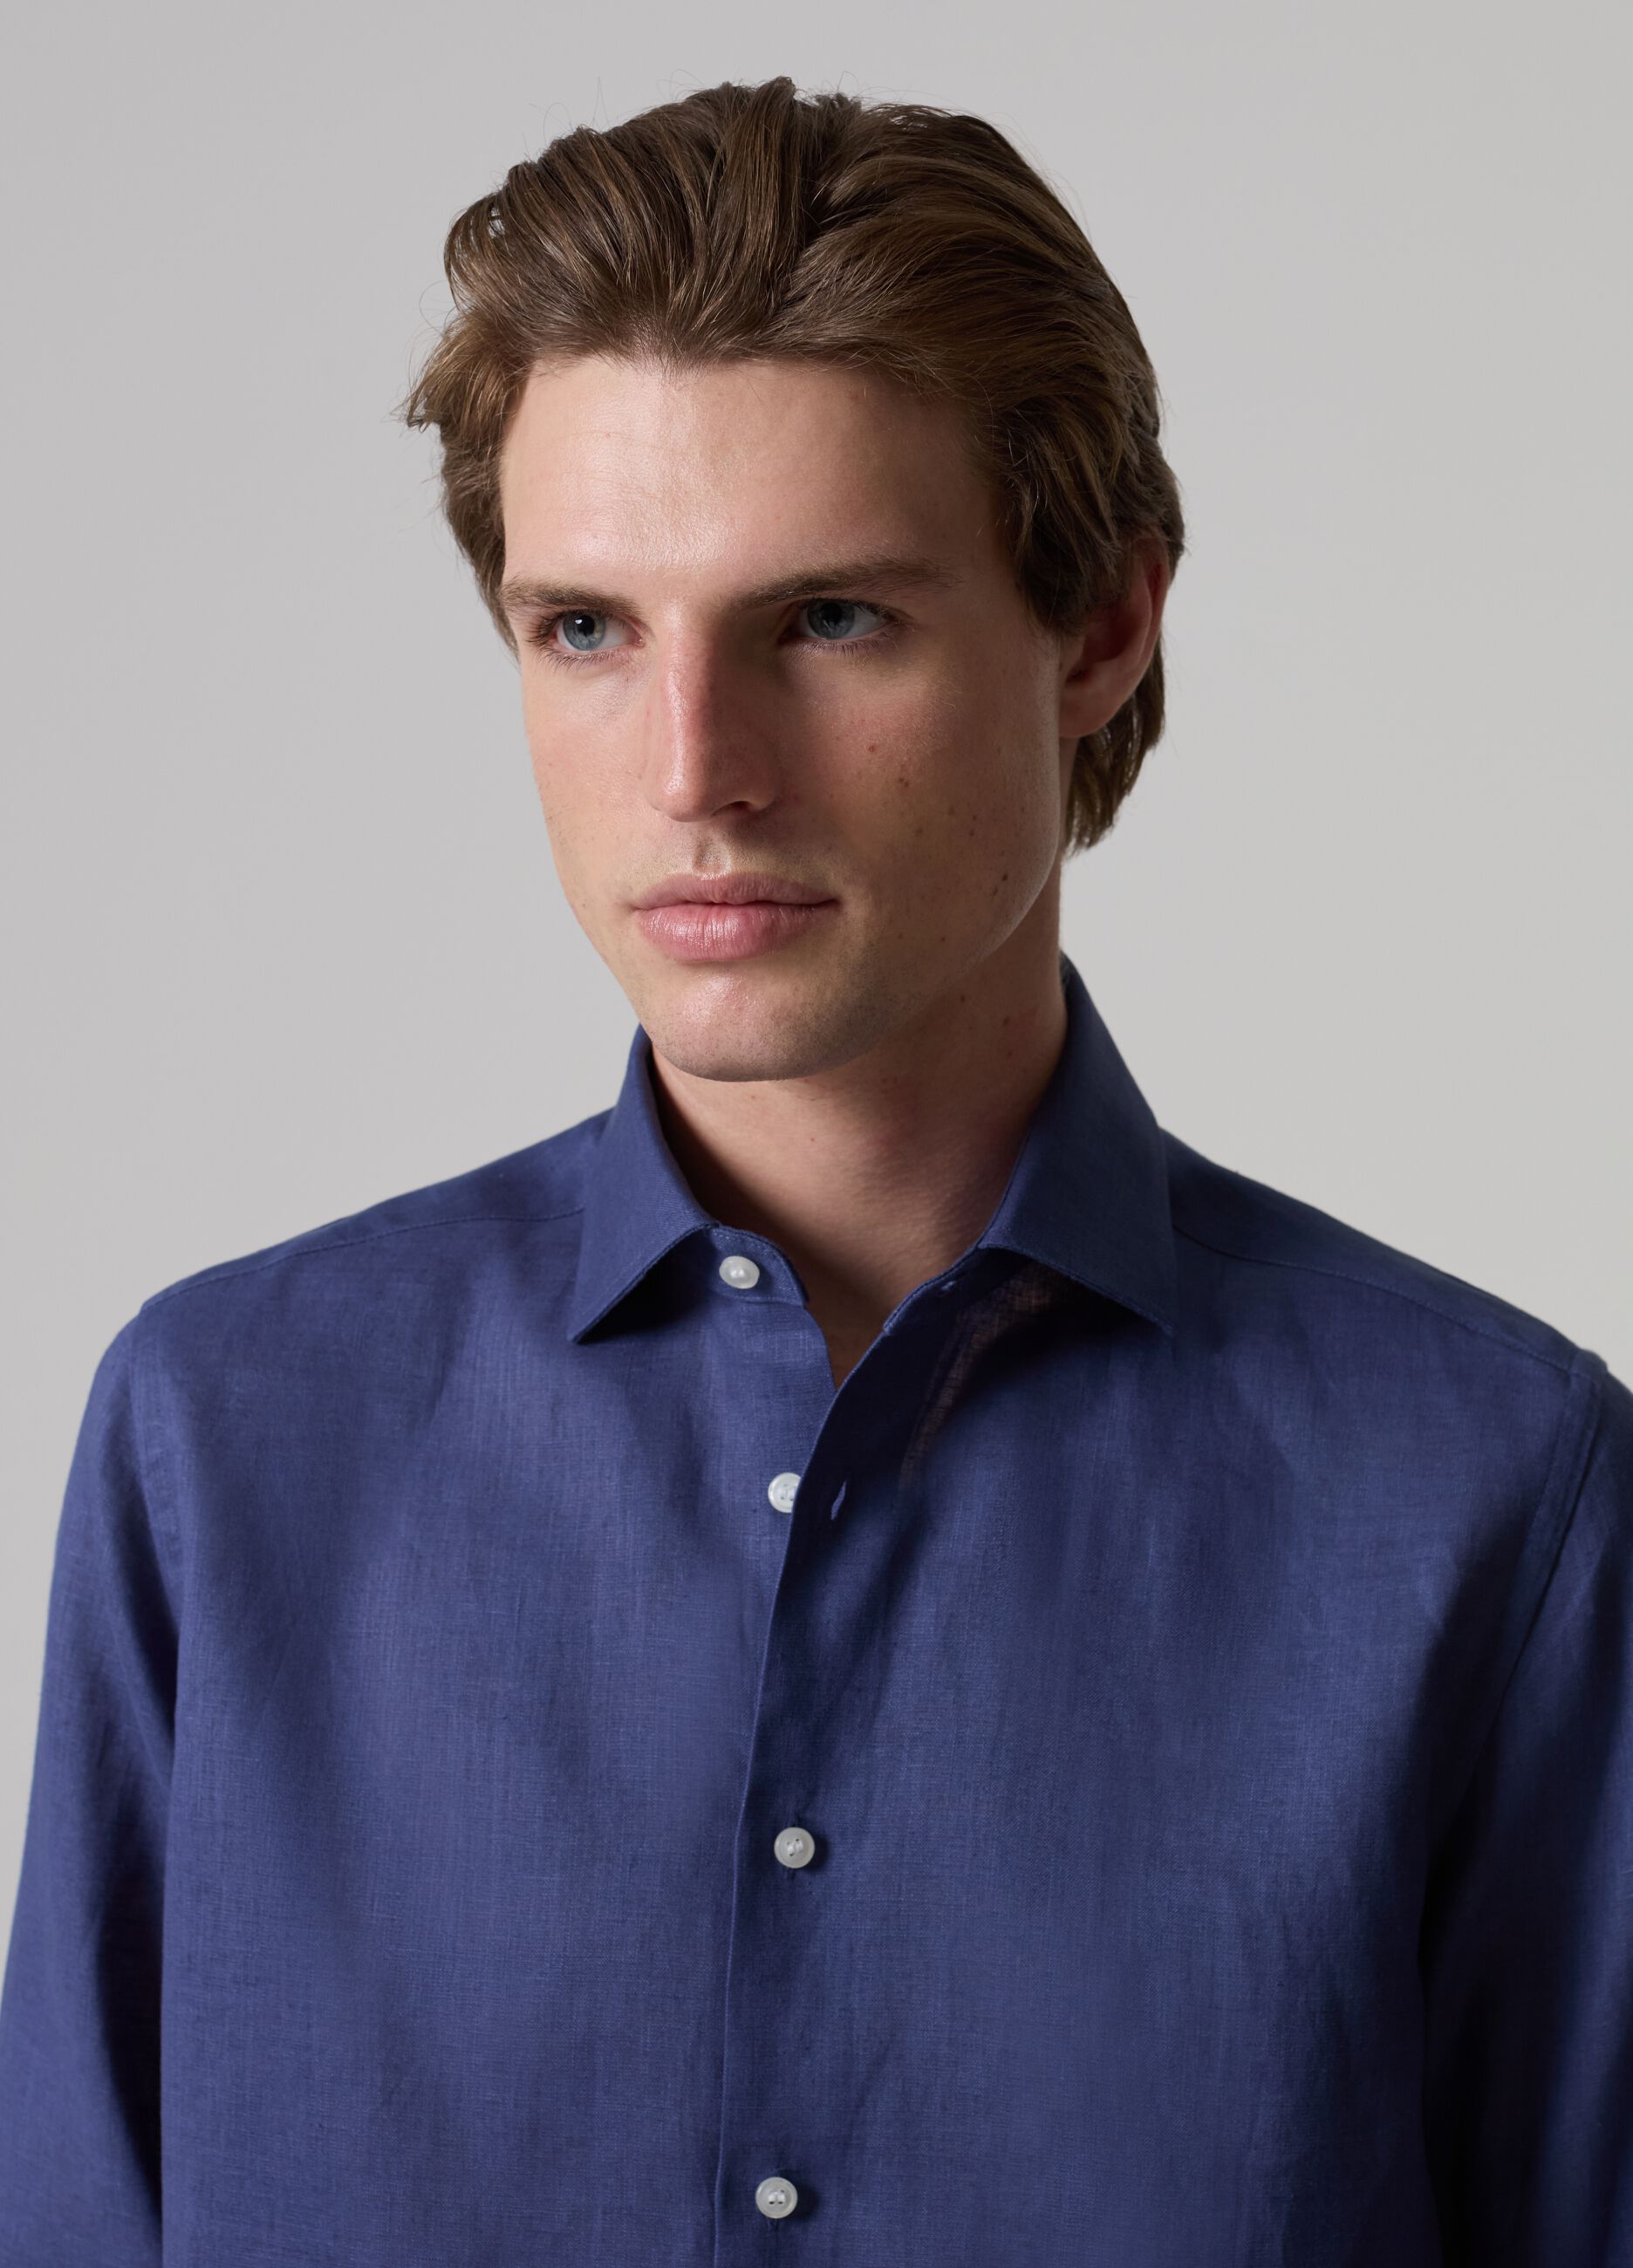 Contemporary shirt in linen